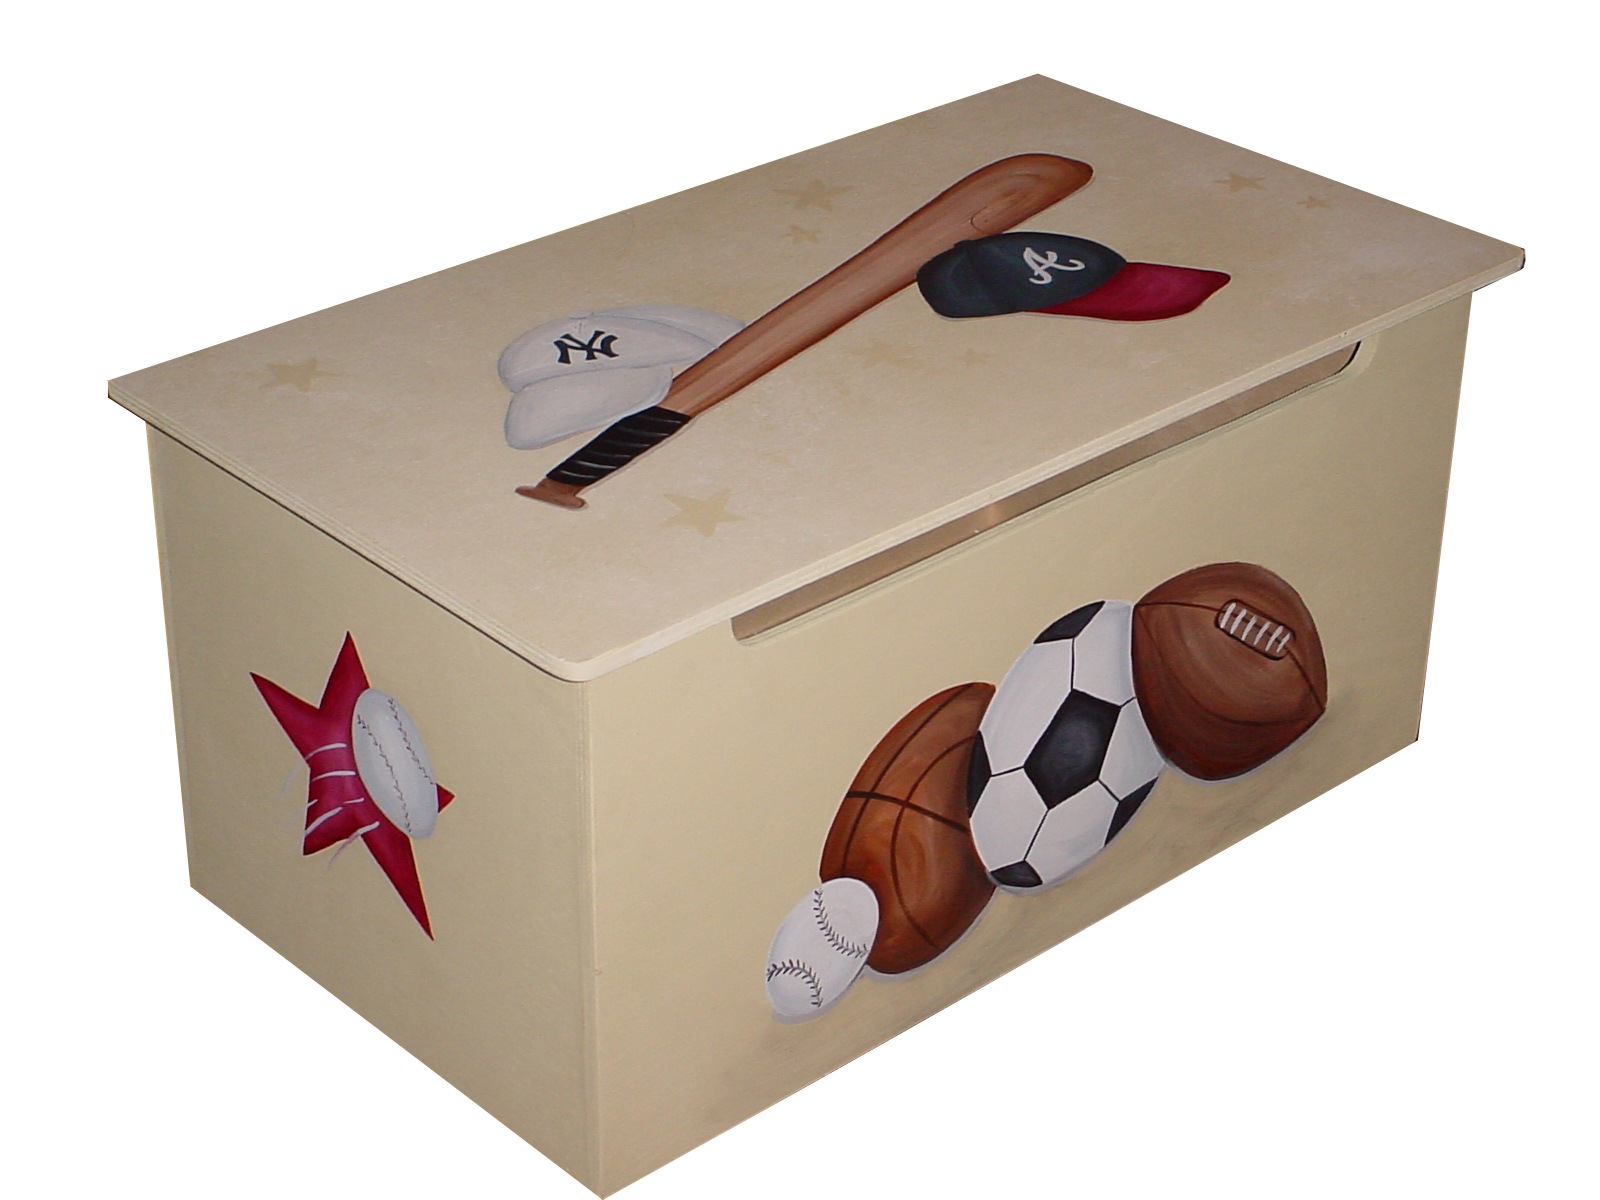 Hand Painted Toy Boxes | Heart Handmade Blog | Handmade ...